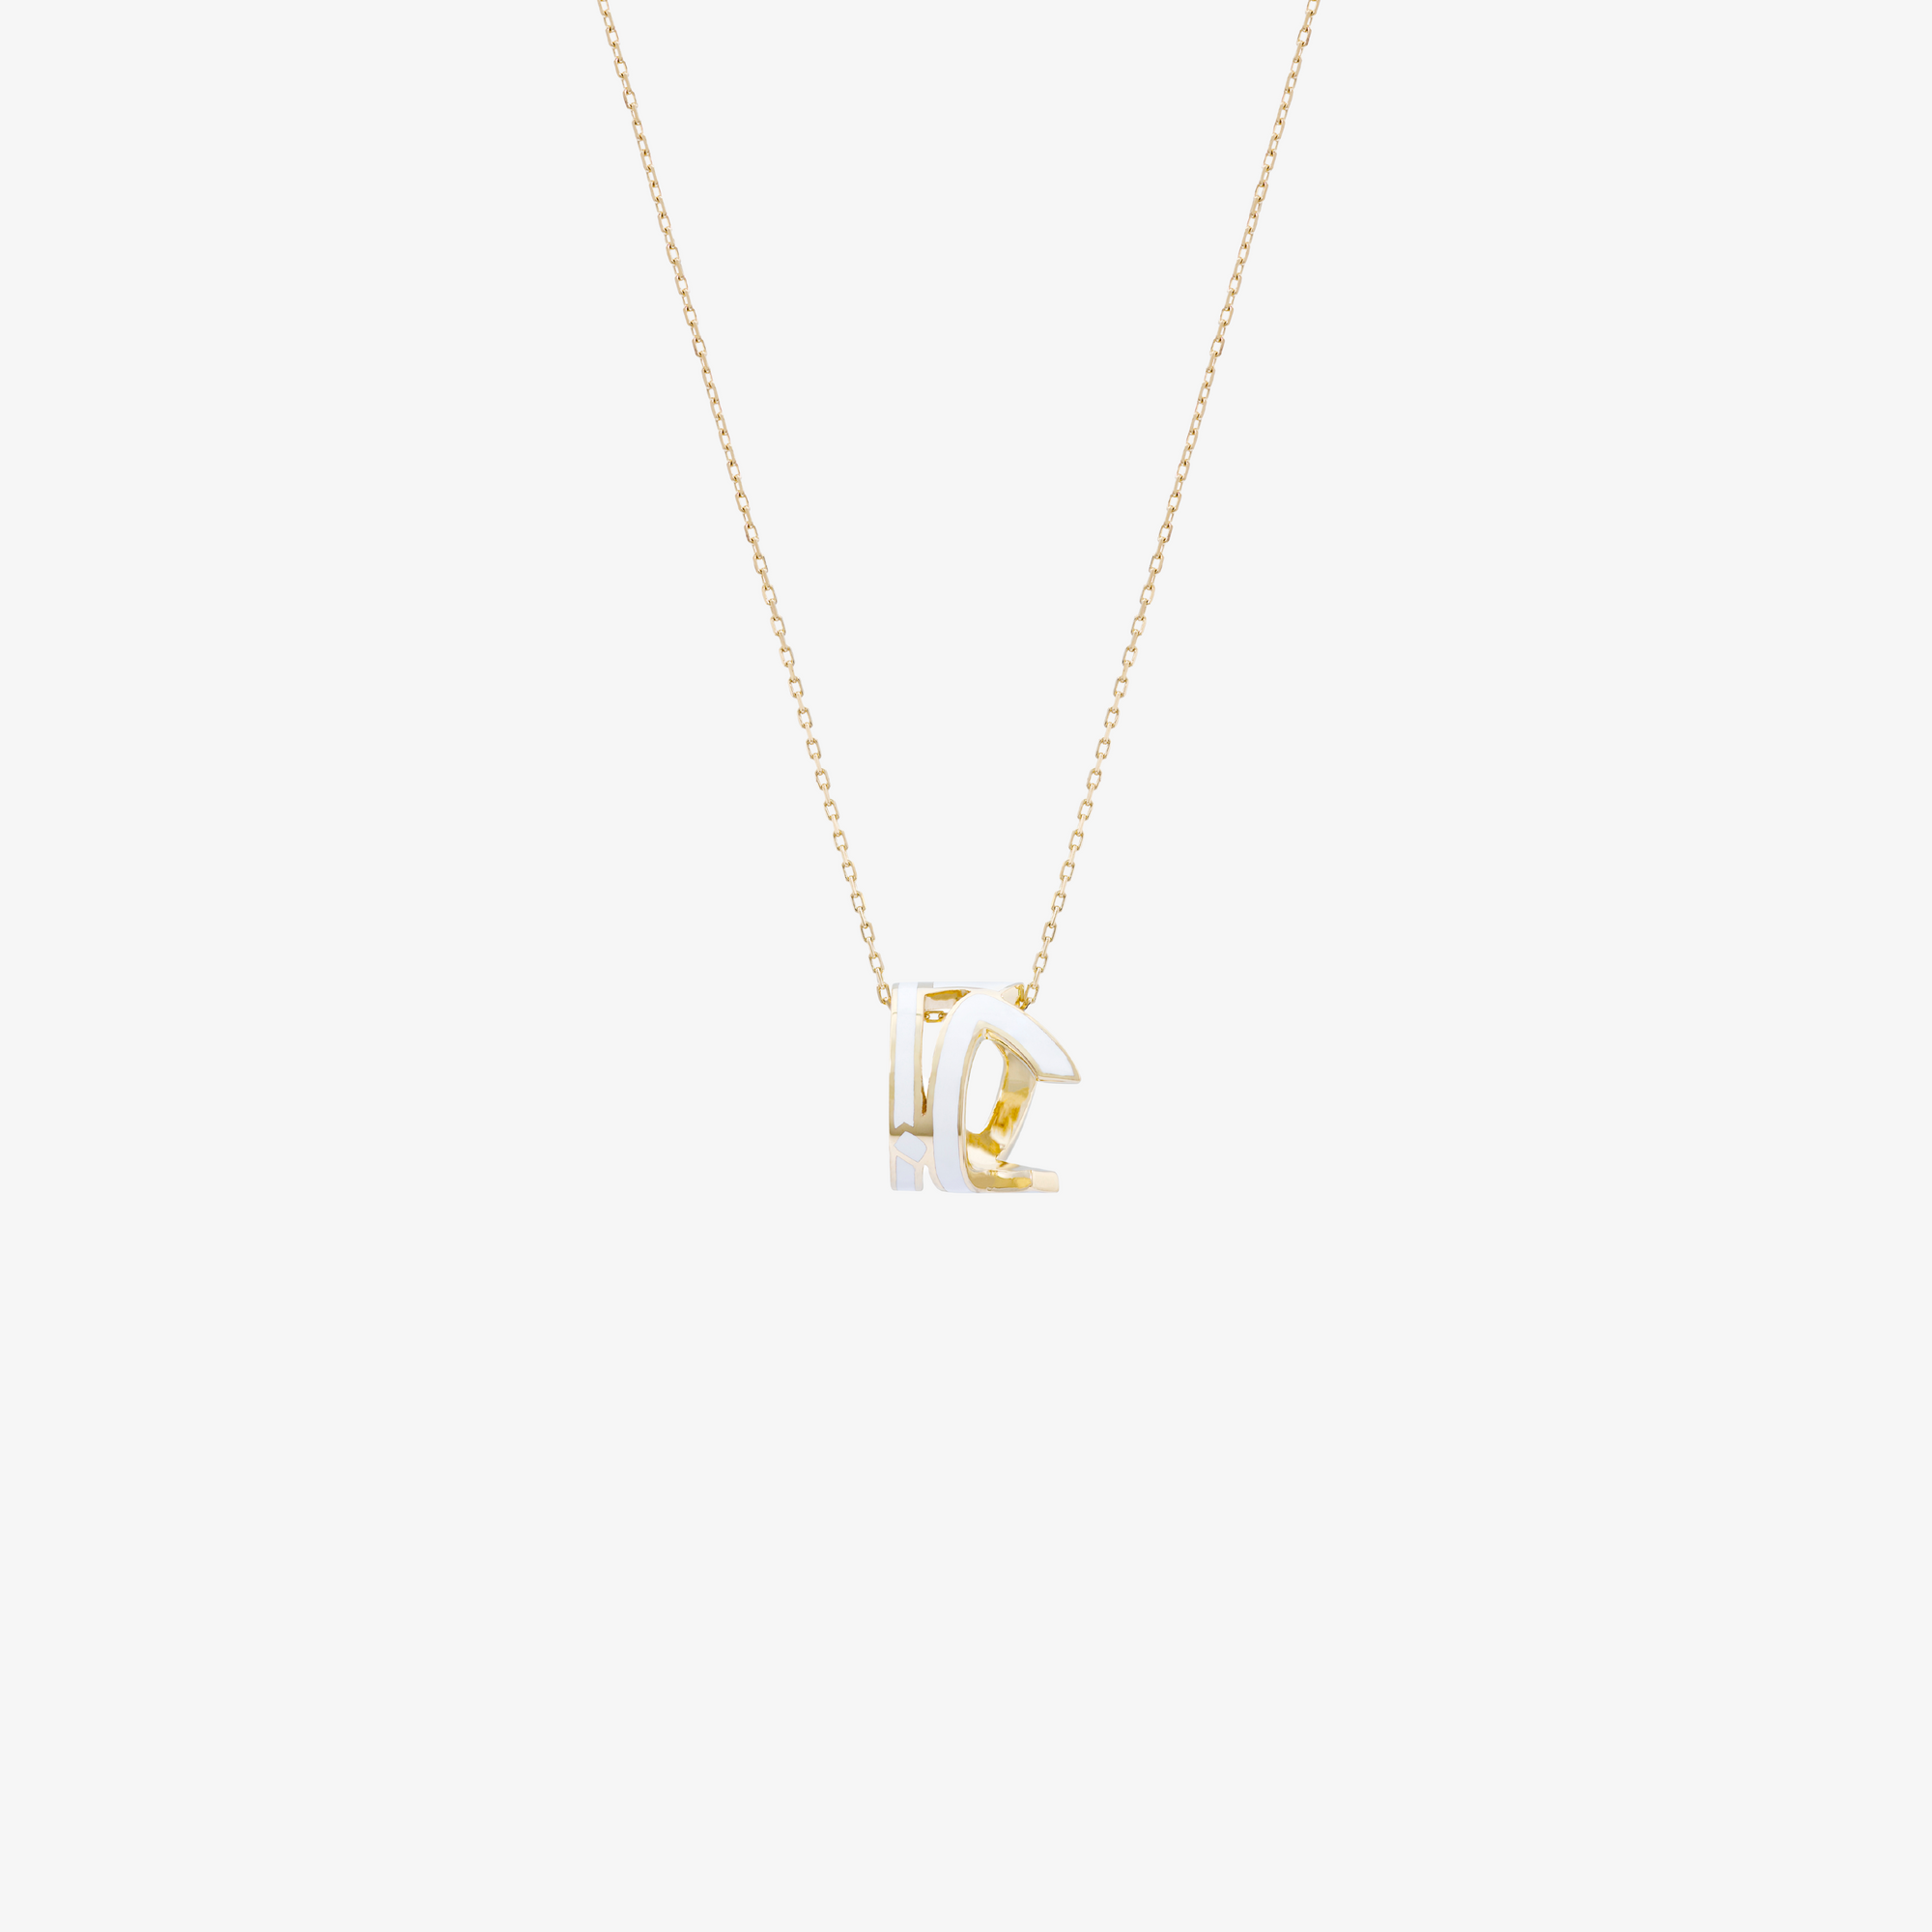 HOBBI - 18K Gold & Enamel "Love" Necklace